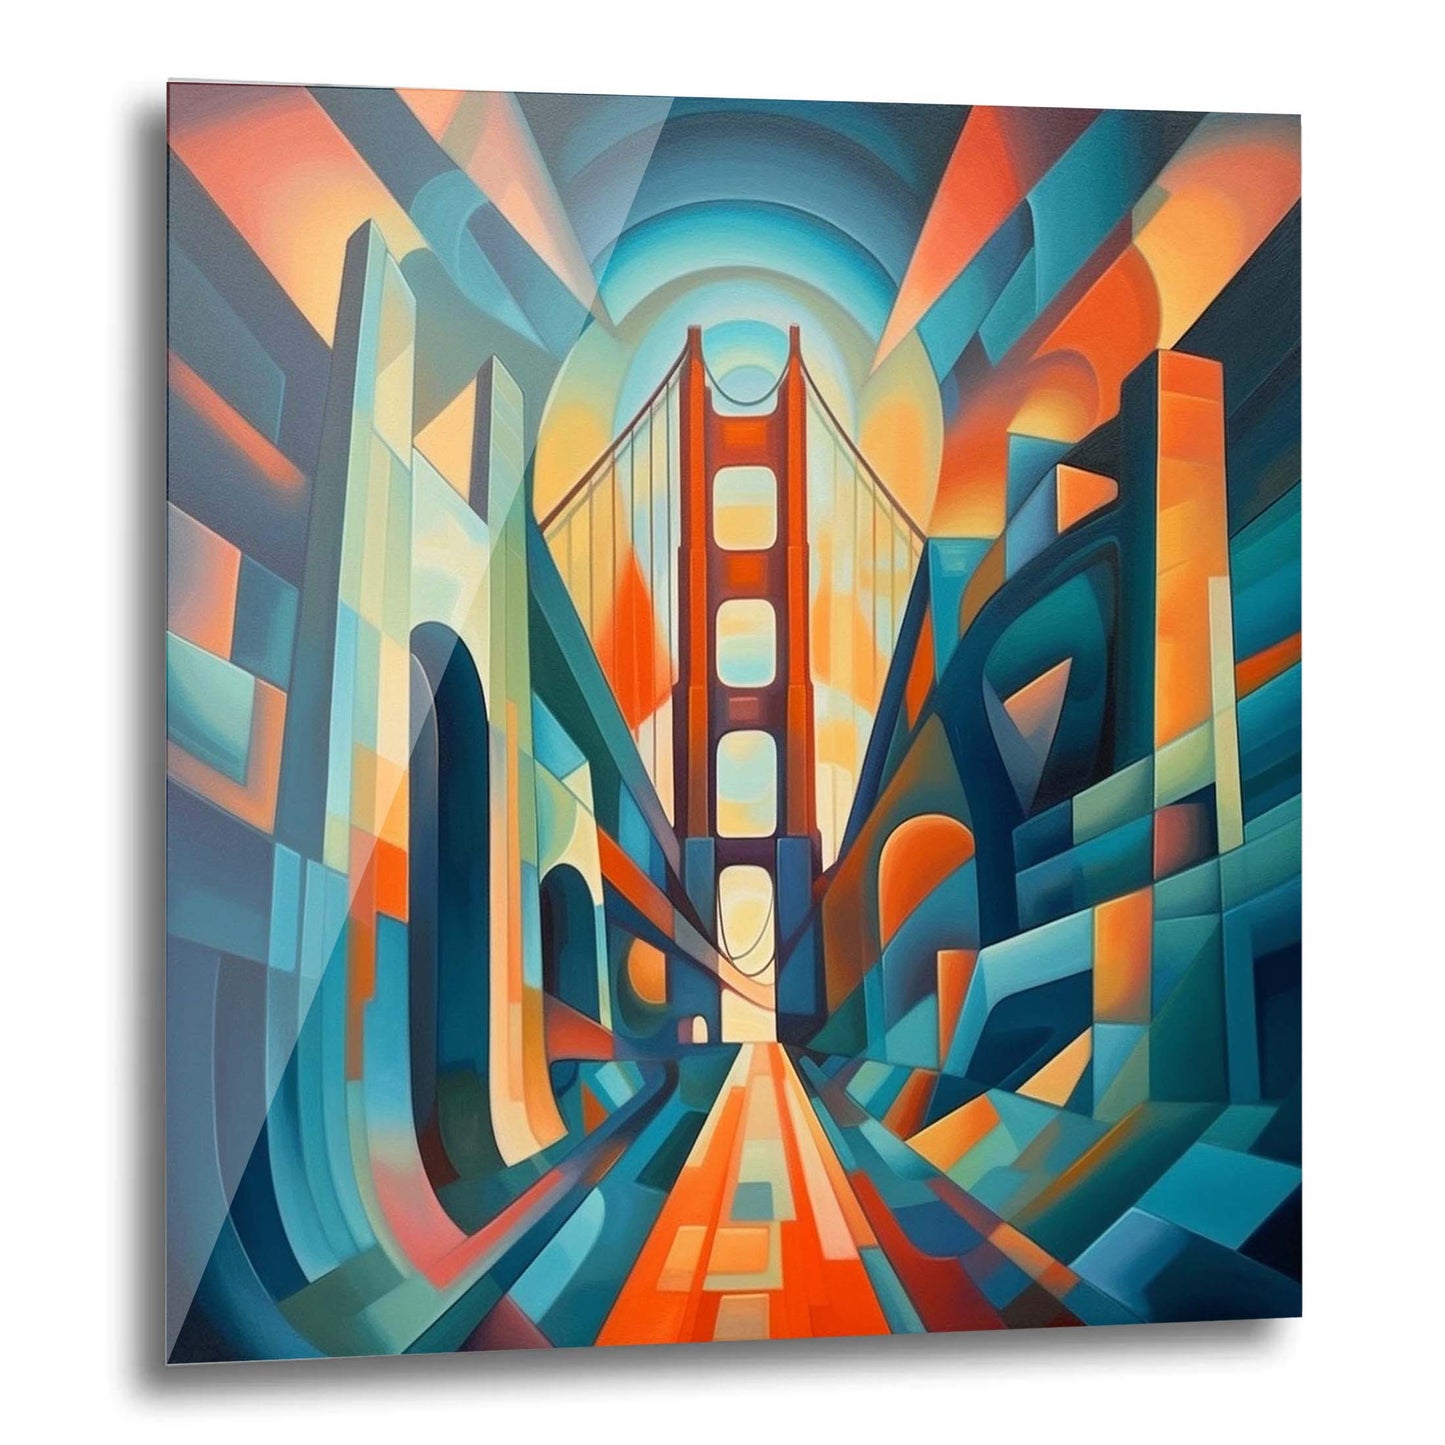 San Francisco Golden Gate Bridge - mural in the style of futurism